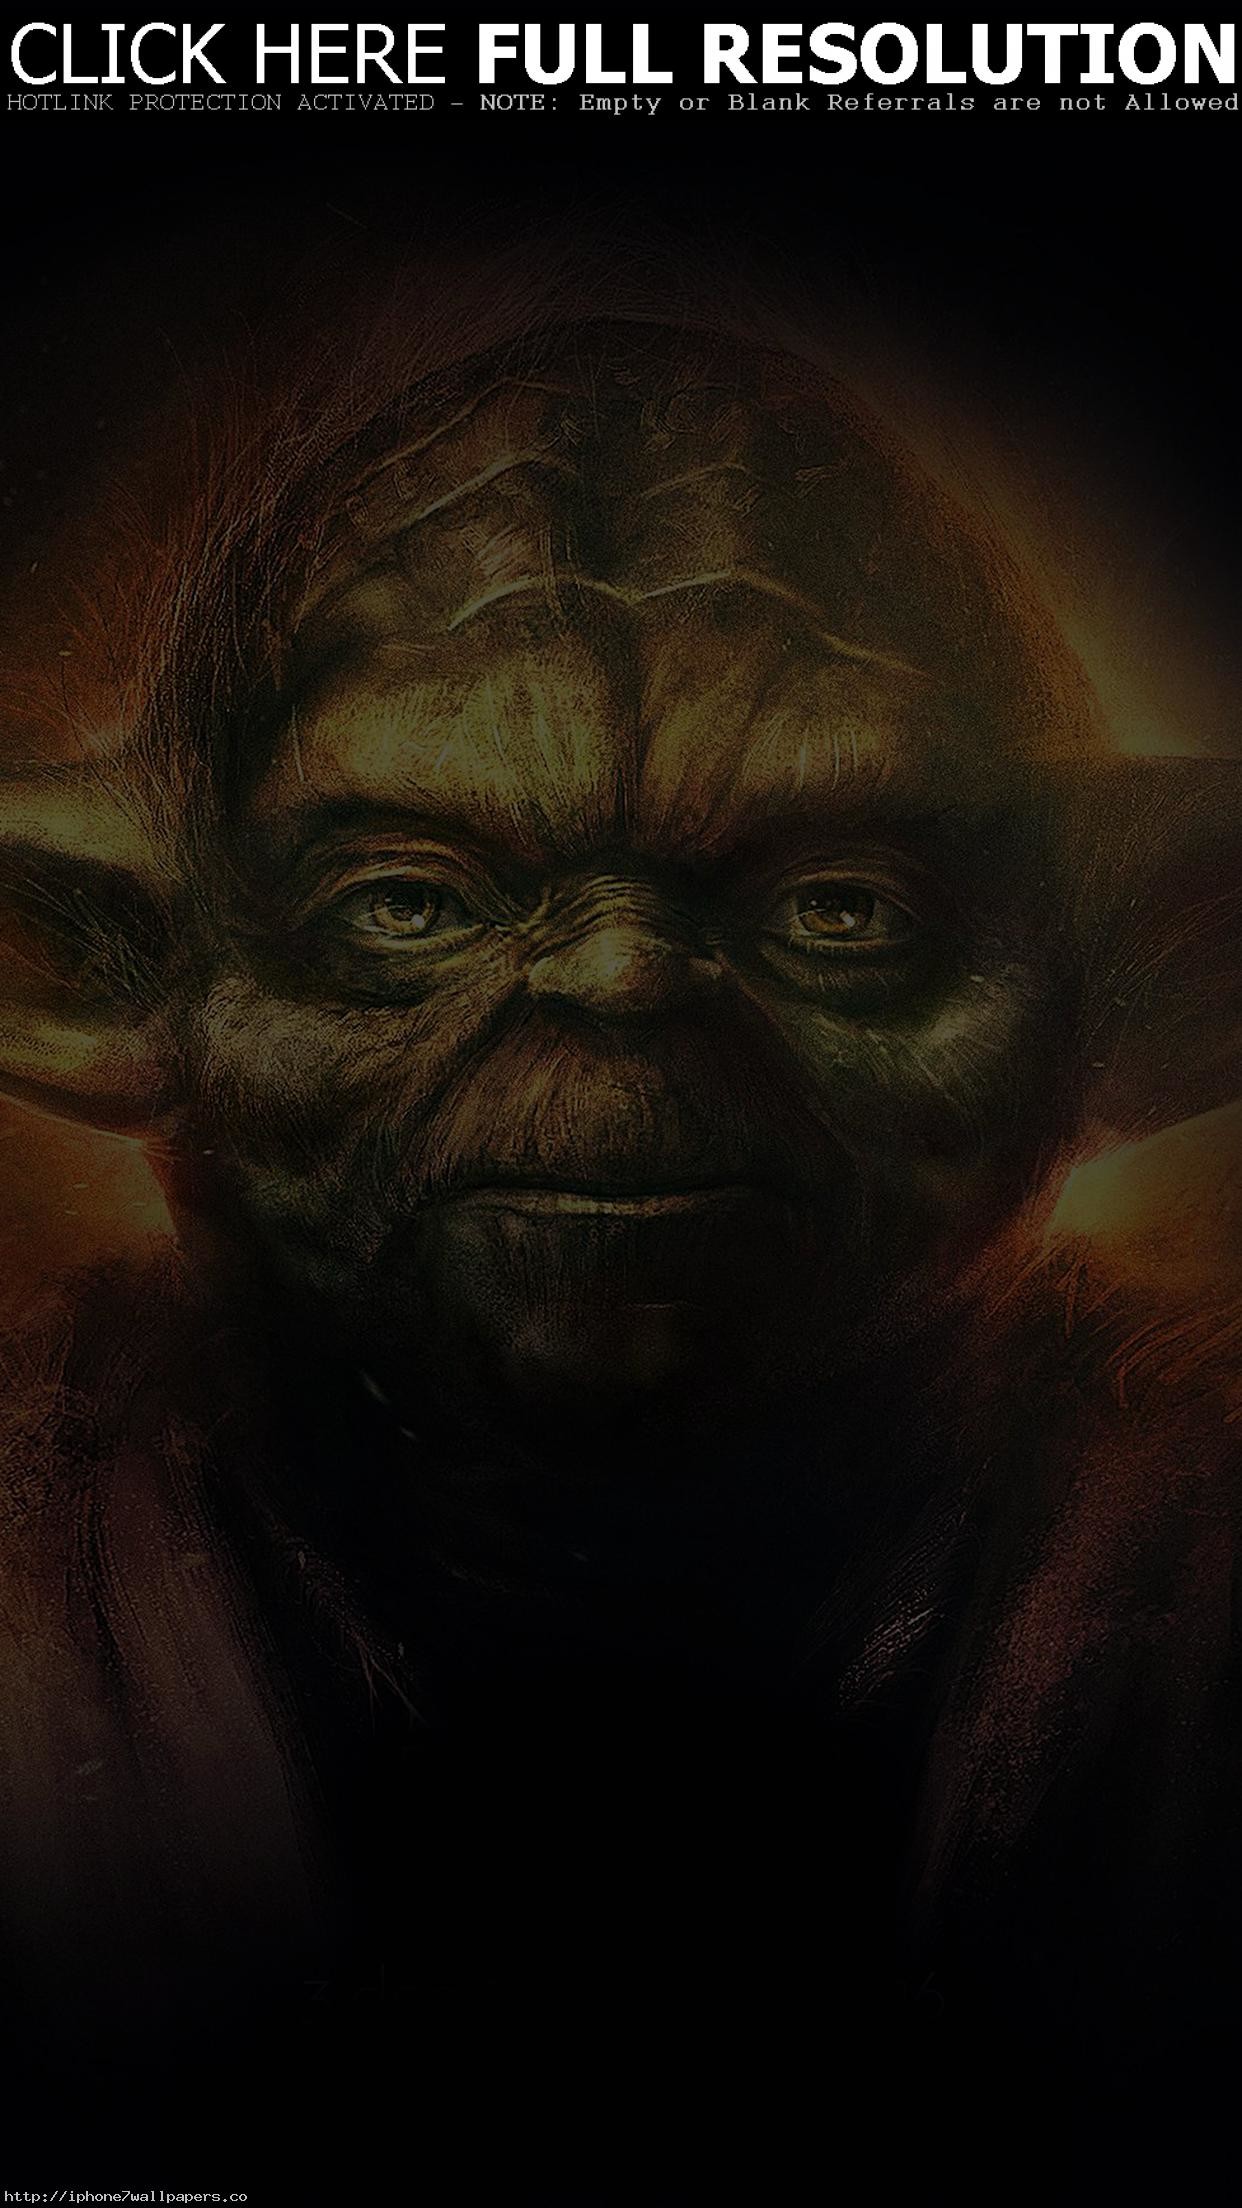 Yoda Starwars Art Dark Illlust Film Poster Android - Warren Street Tube Station - HD Wallpaper 